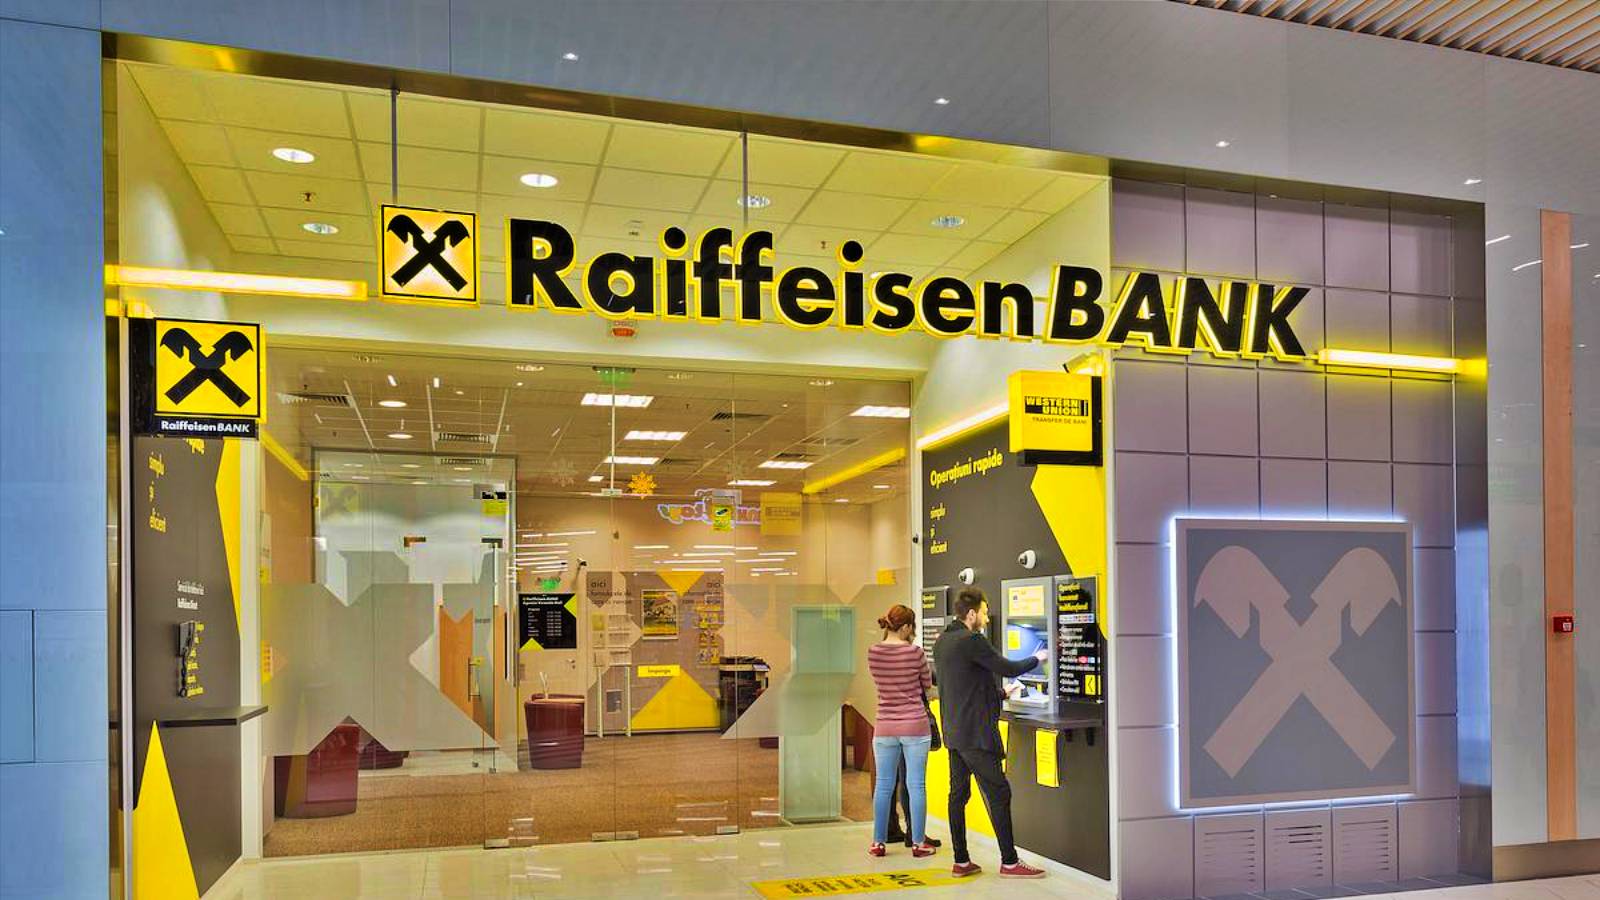 Raiffeisen Bank Anuntul Oficial GRATUIT Clientilor Romania